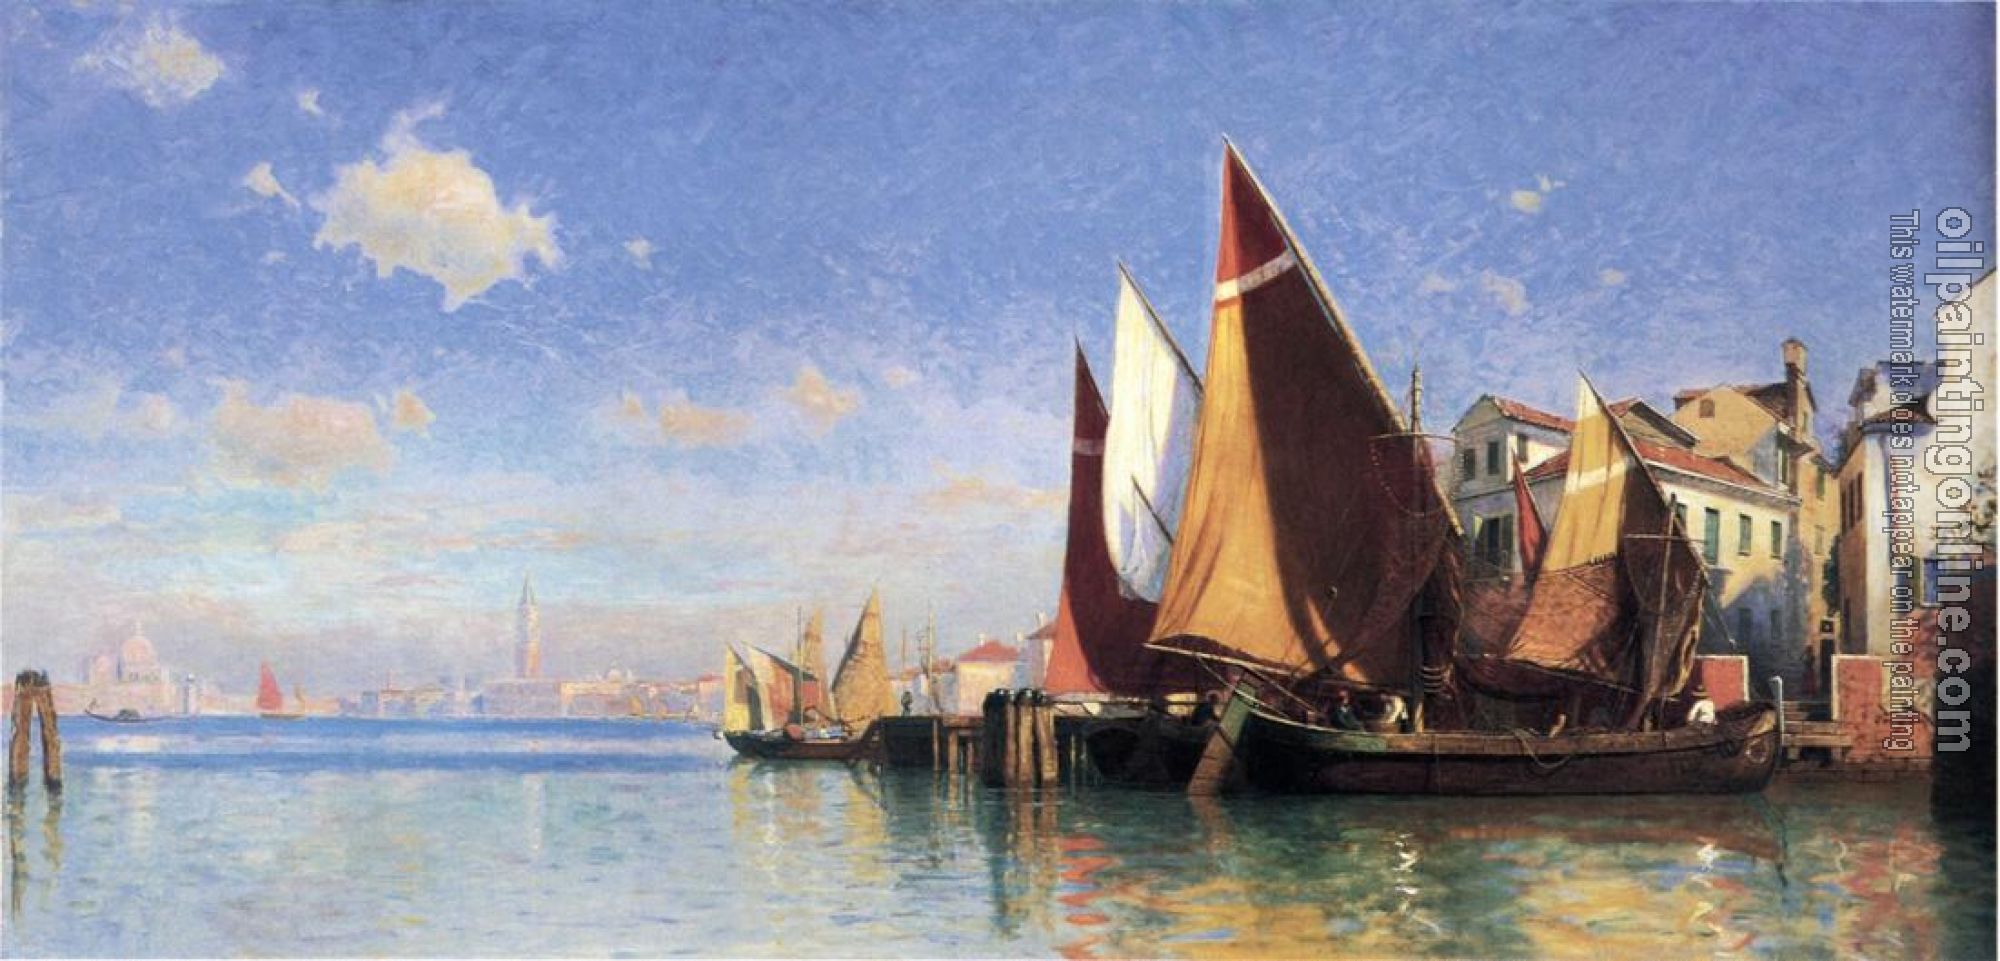 William Stanley Haseltine - Venice